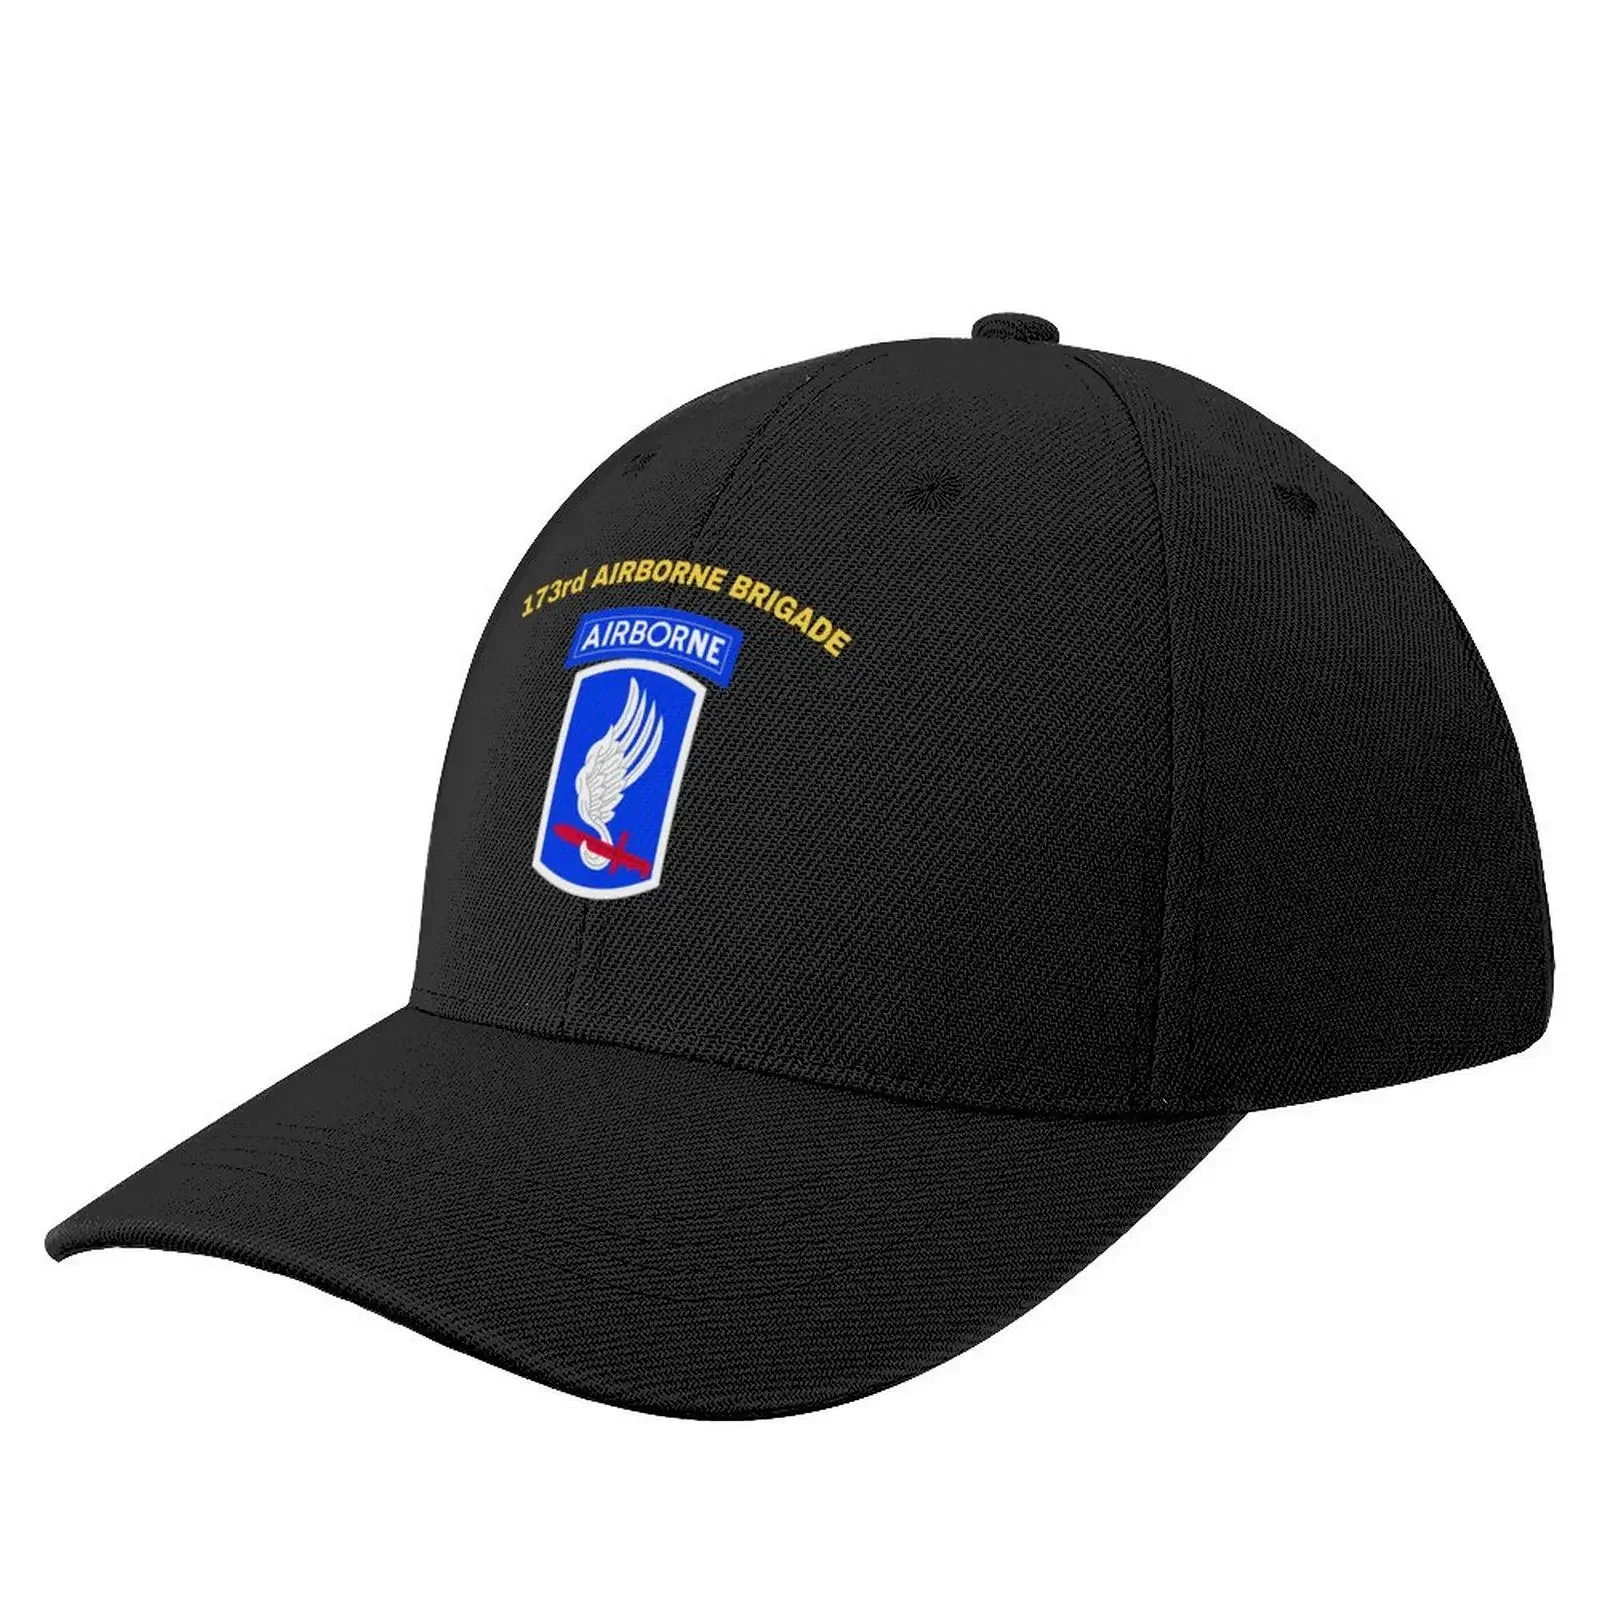 

173rd Airborne Brigade Sky Soldiers Baseball Cap derby hat Luxury Brand Military Cap Man Men's Baseball Women's